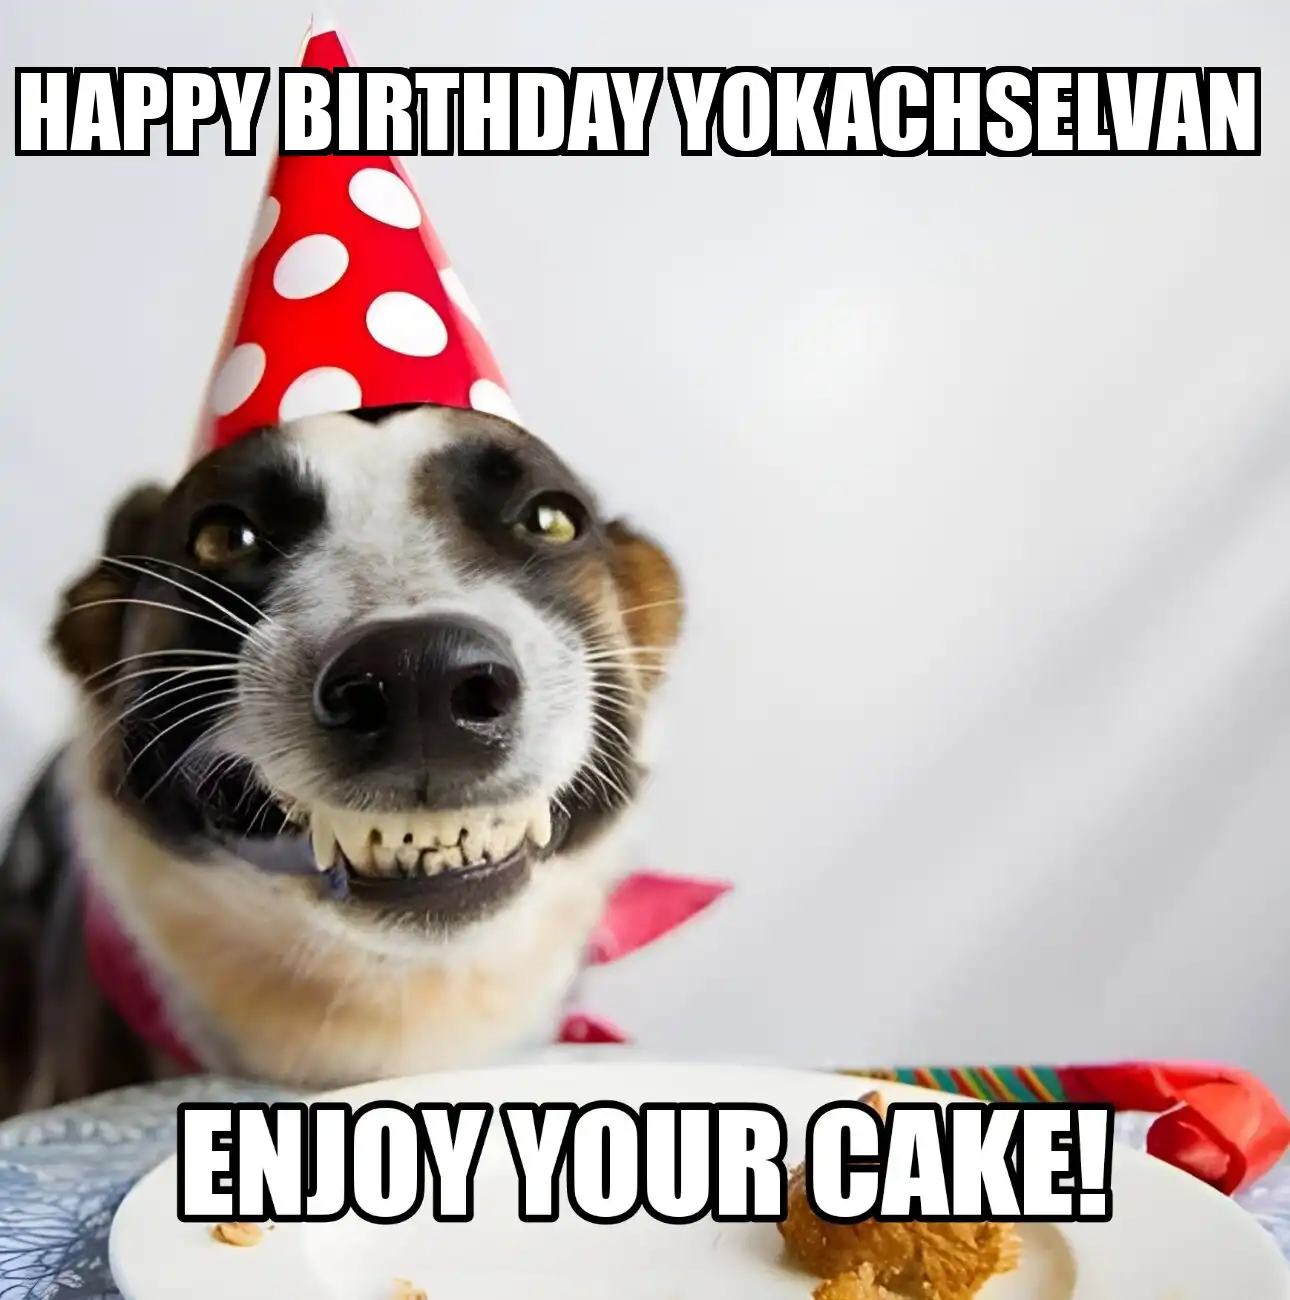 Happy Birthday Yokachselvan Enjoy Your Cake Dog Meme